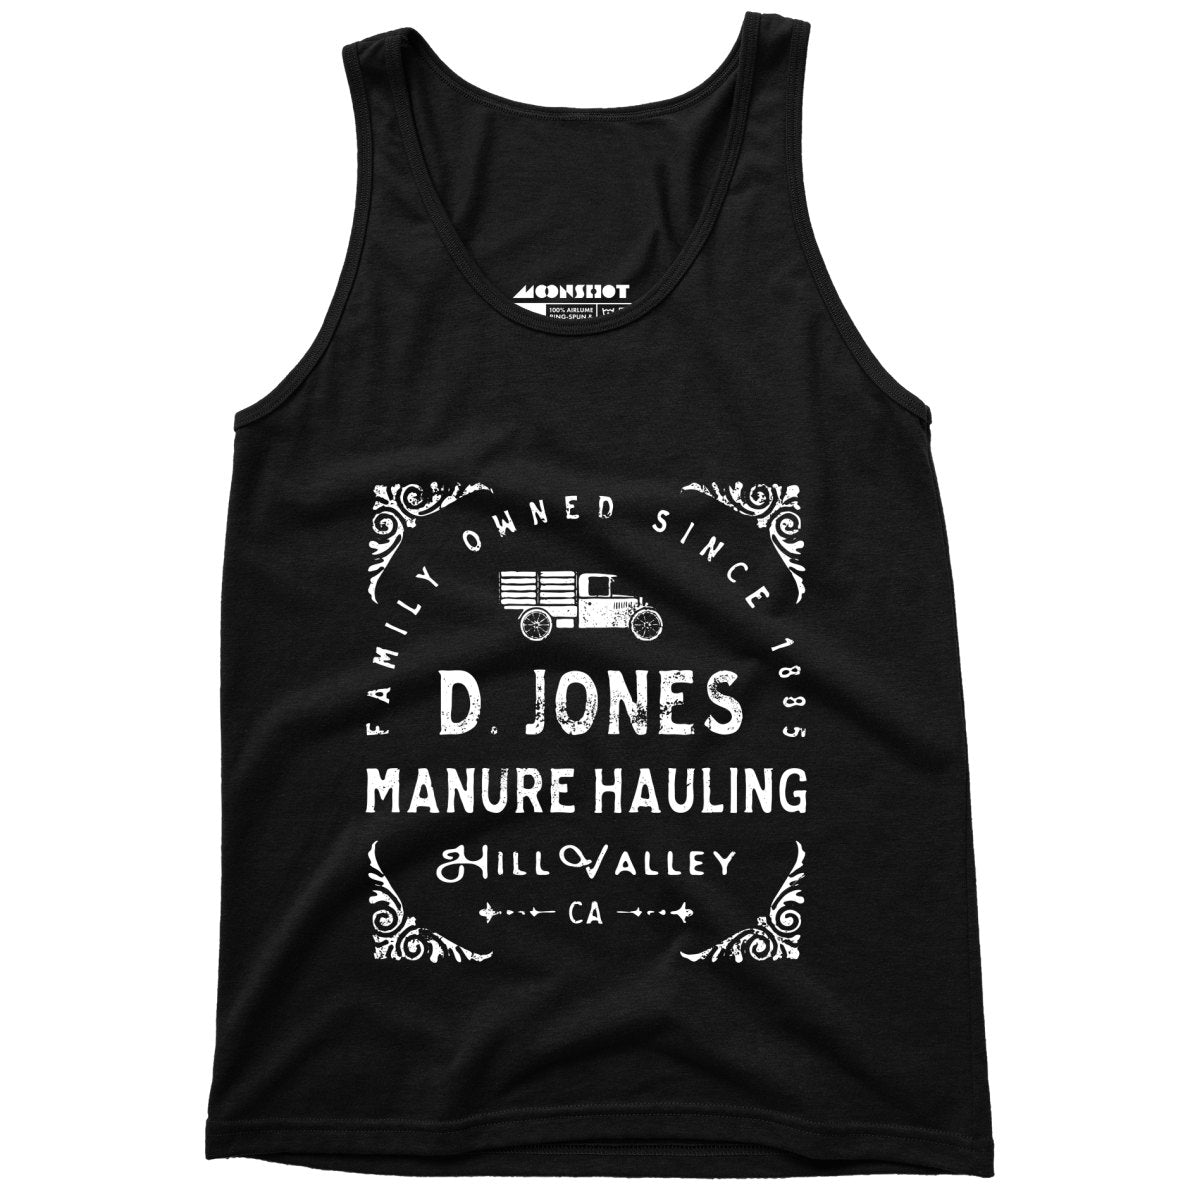 D. Jones Manure Hauling - Hill Valley - Unisex Tank Top